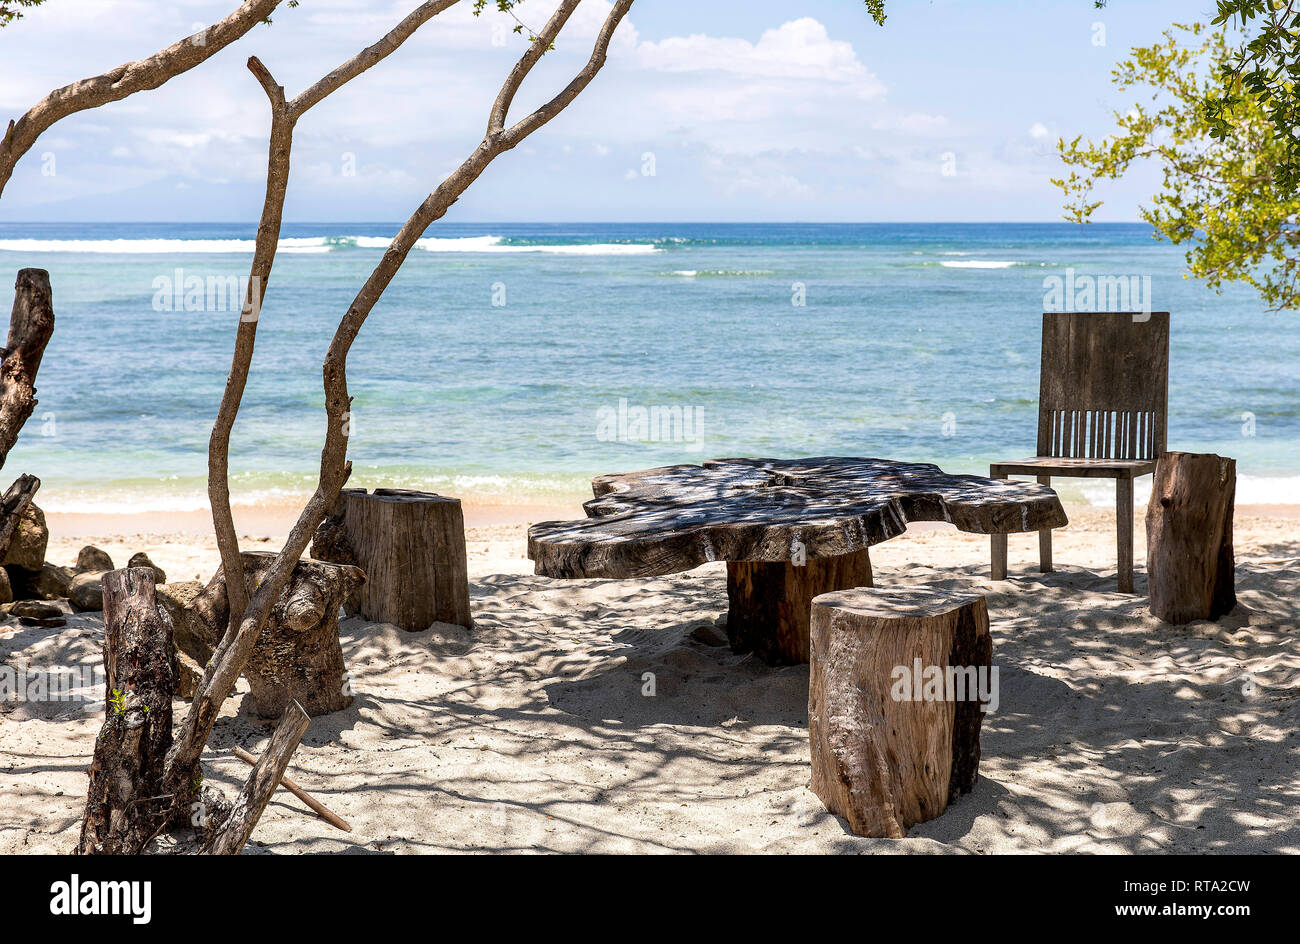 Wooden seating groups on the beach of Gili Trawangan, Indonesia. Stock Photo